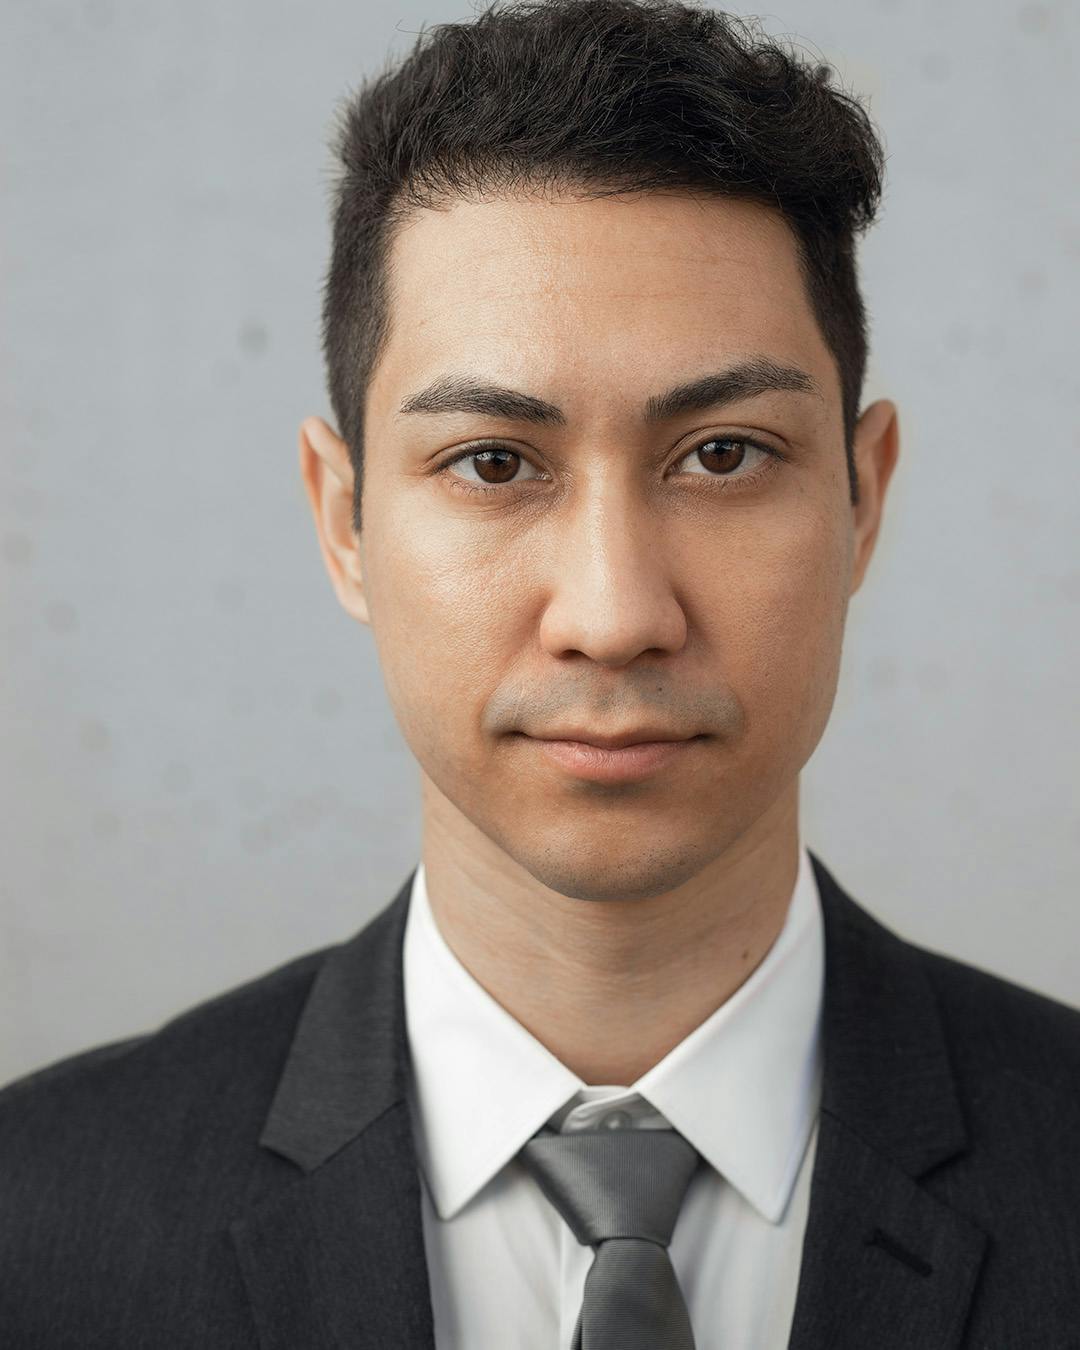 Business headshot of man wearing suit.